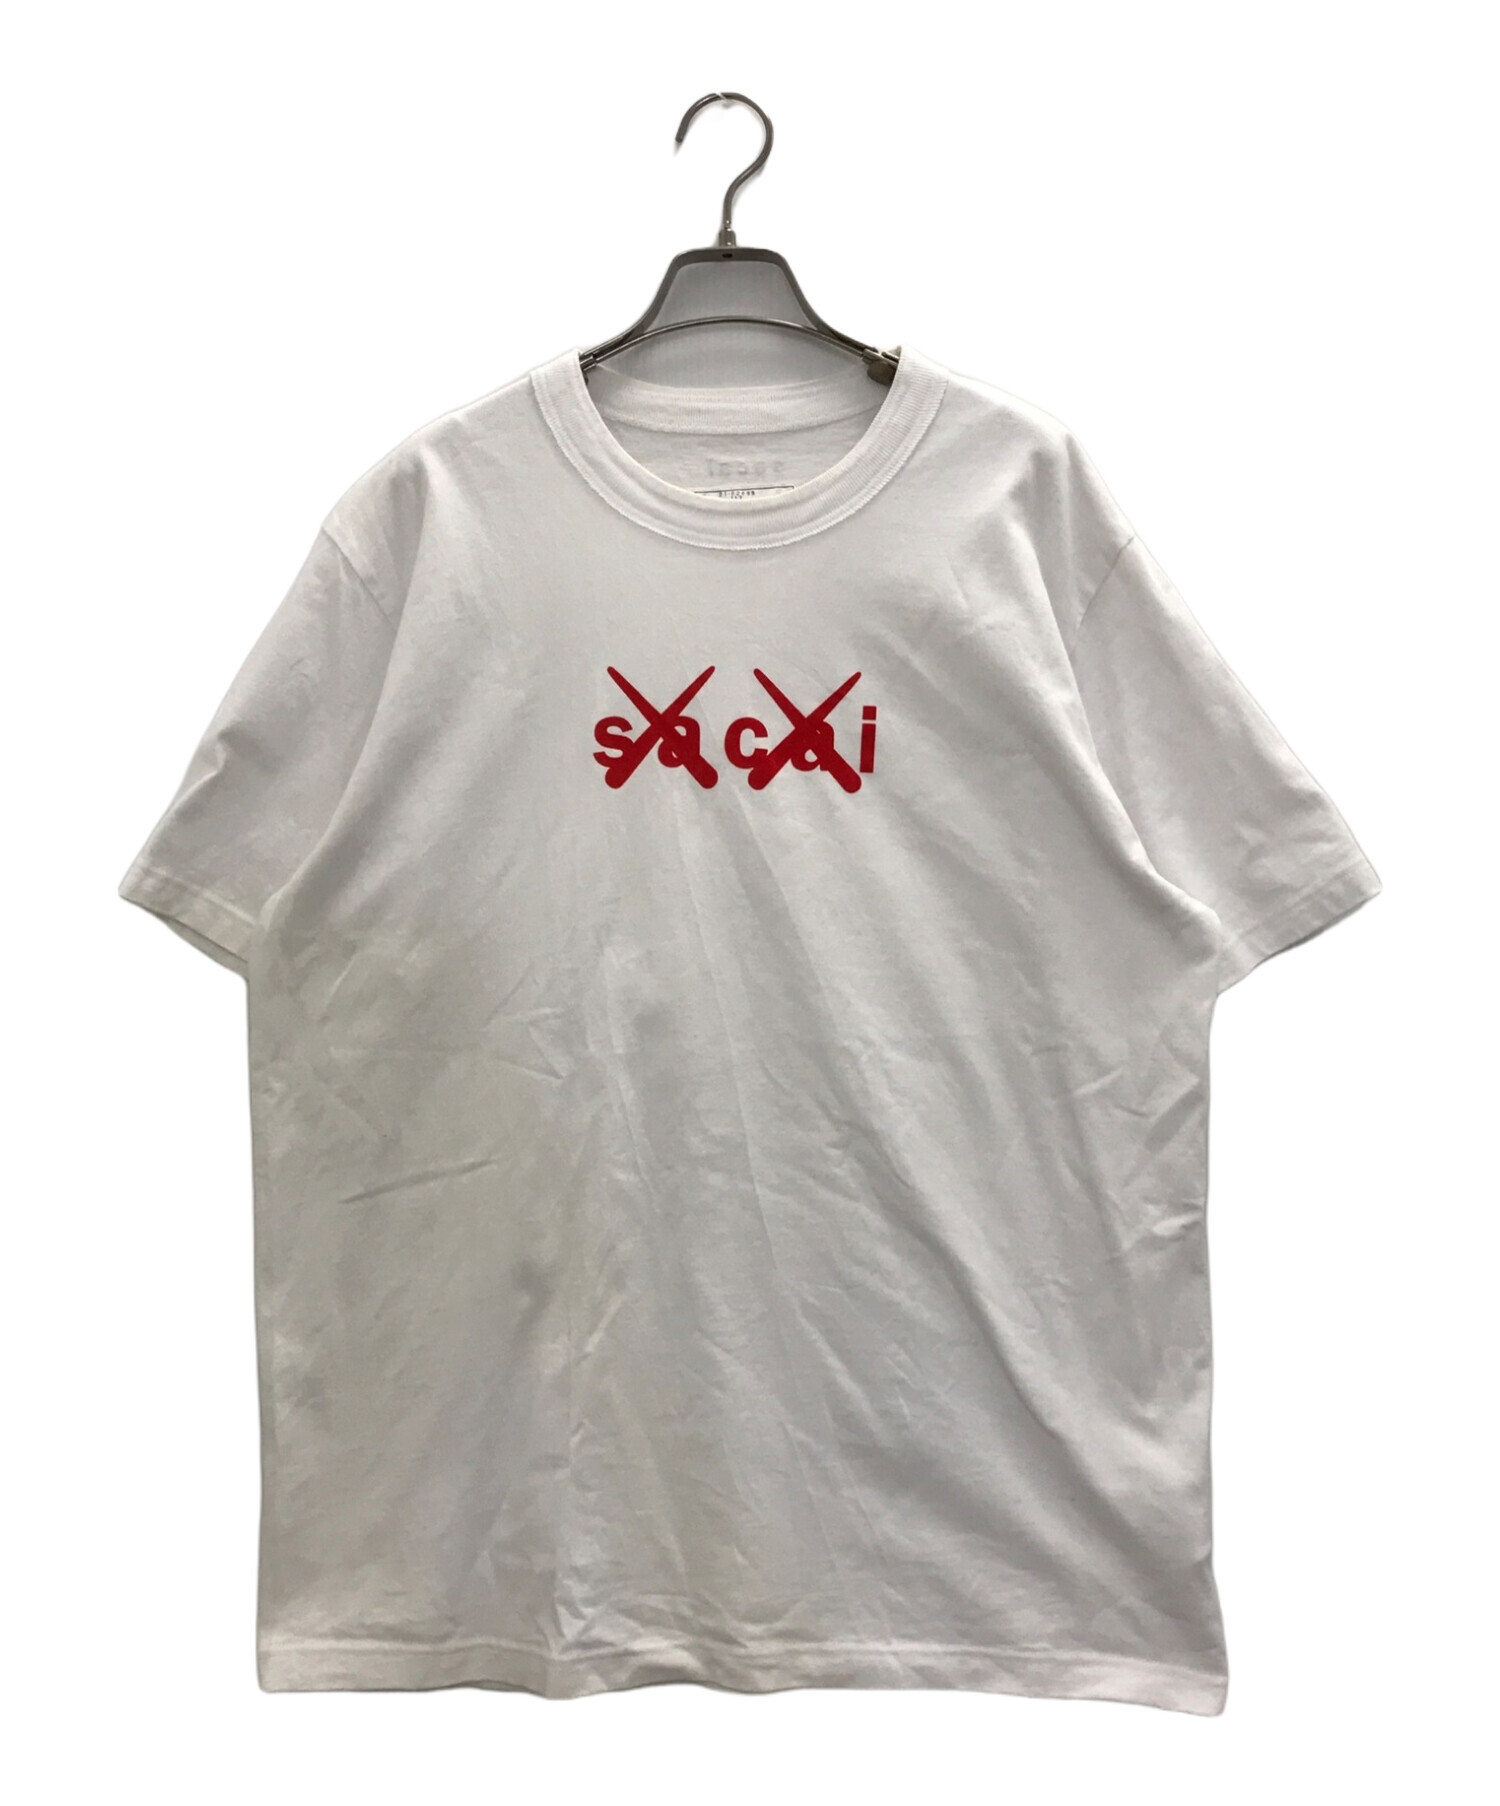 sacai (サカイ) KAWS (カウズ) フロックロゴ プリントTシャツ ホワイト サイズ:4